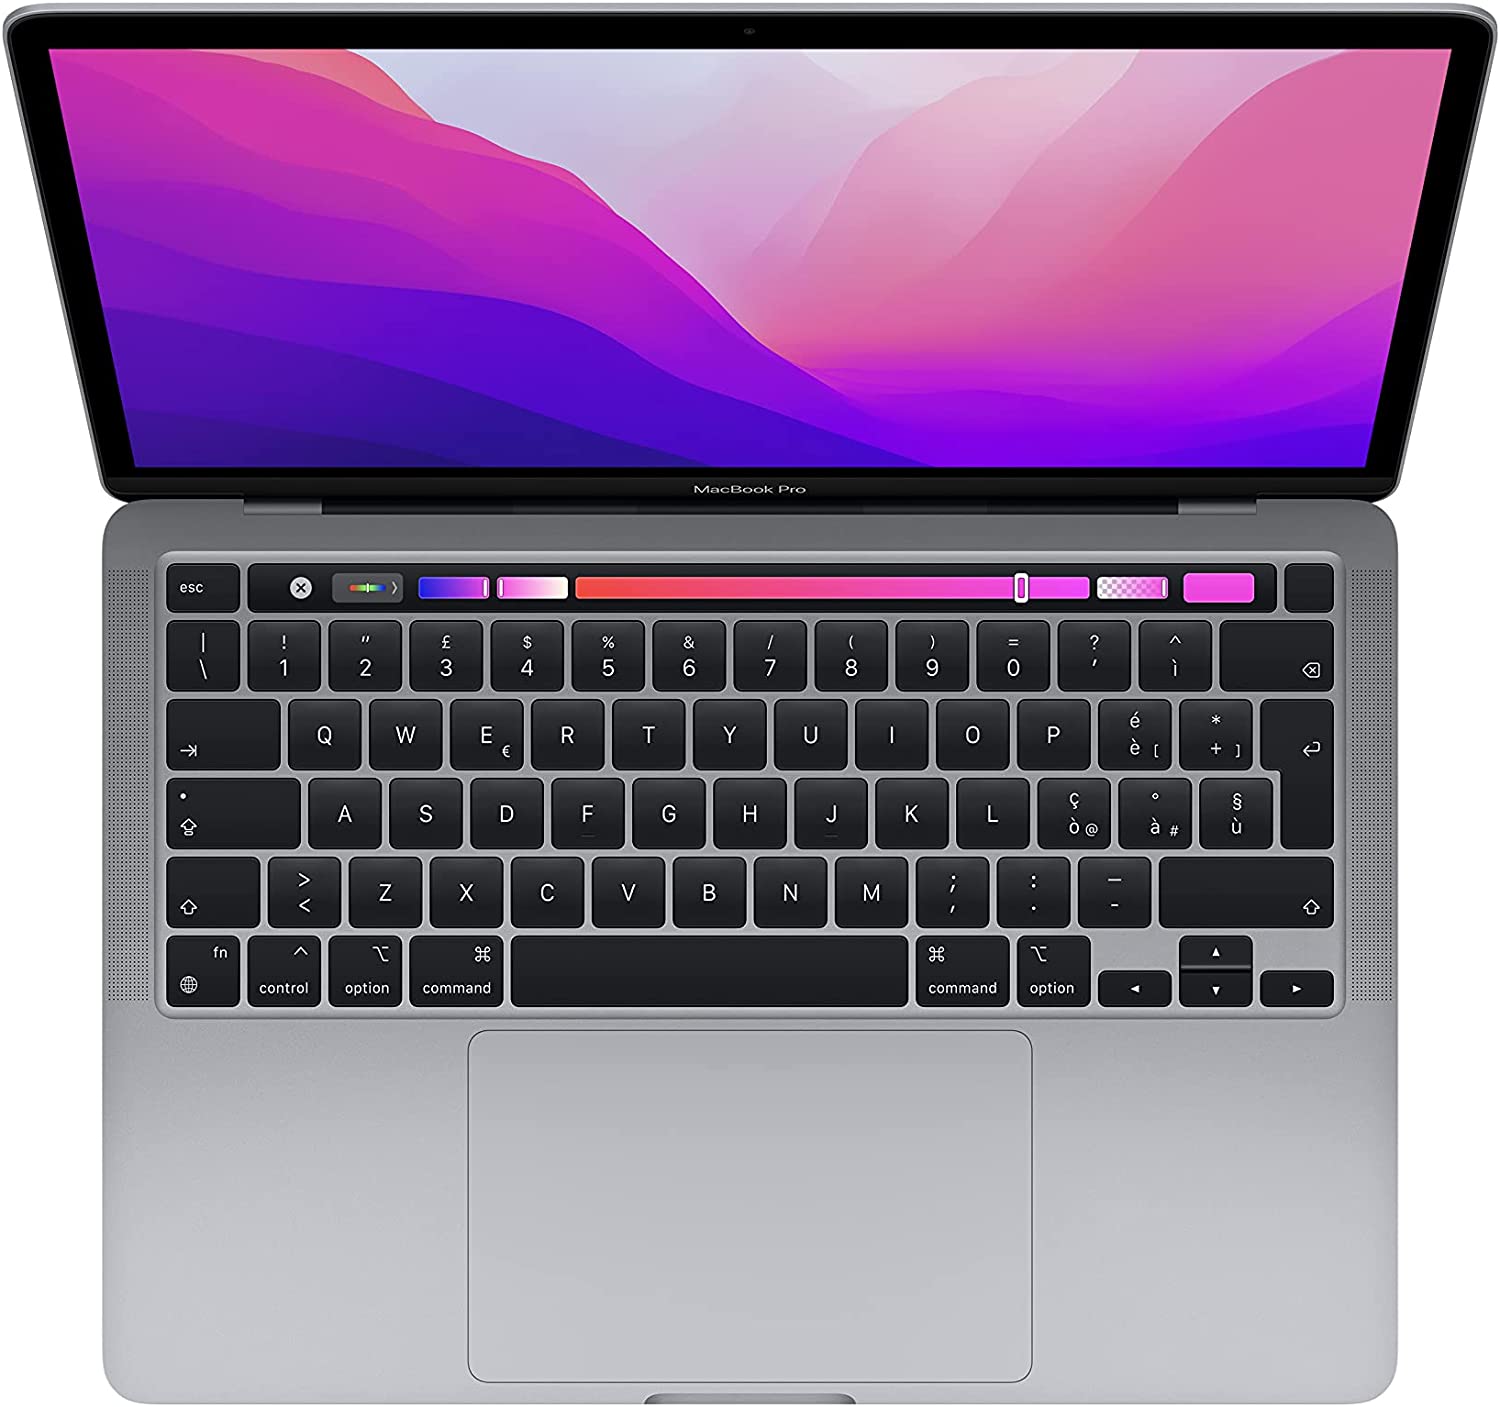 
                                    
                                Quale MacBook comprare: i migliori per le proprie esigenze tra Air, Pro, 13 e 16 pollici